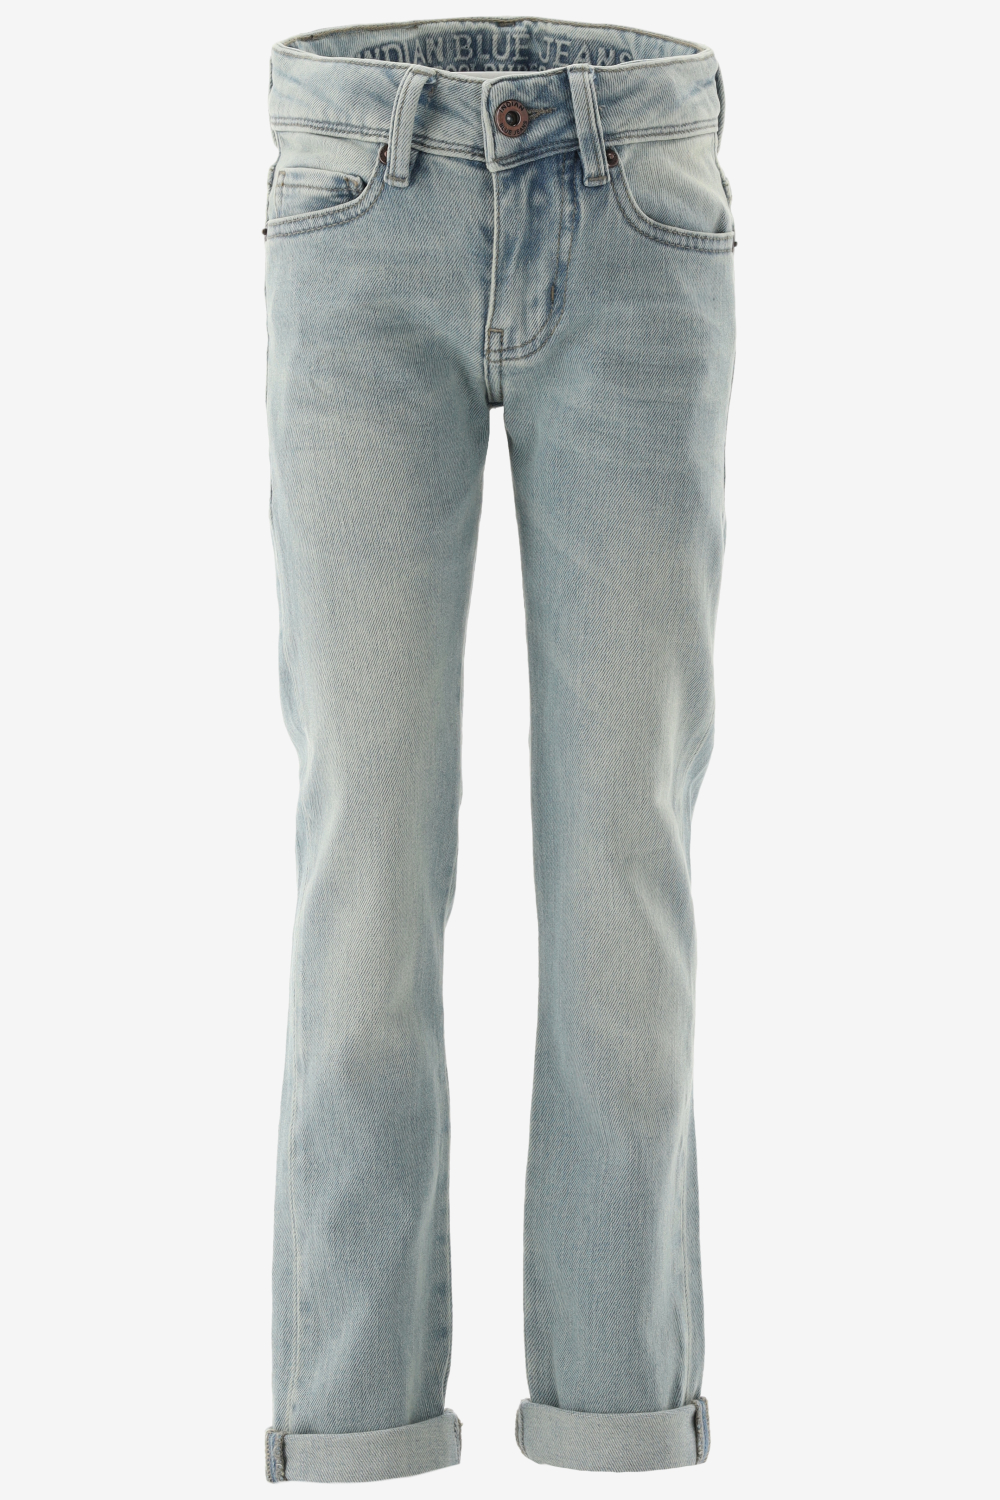 Indian Blue Jeans - Jeans - Light Denim - Maat 146